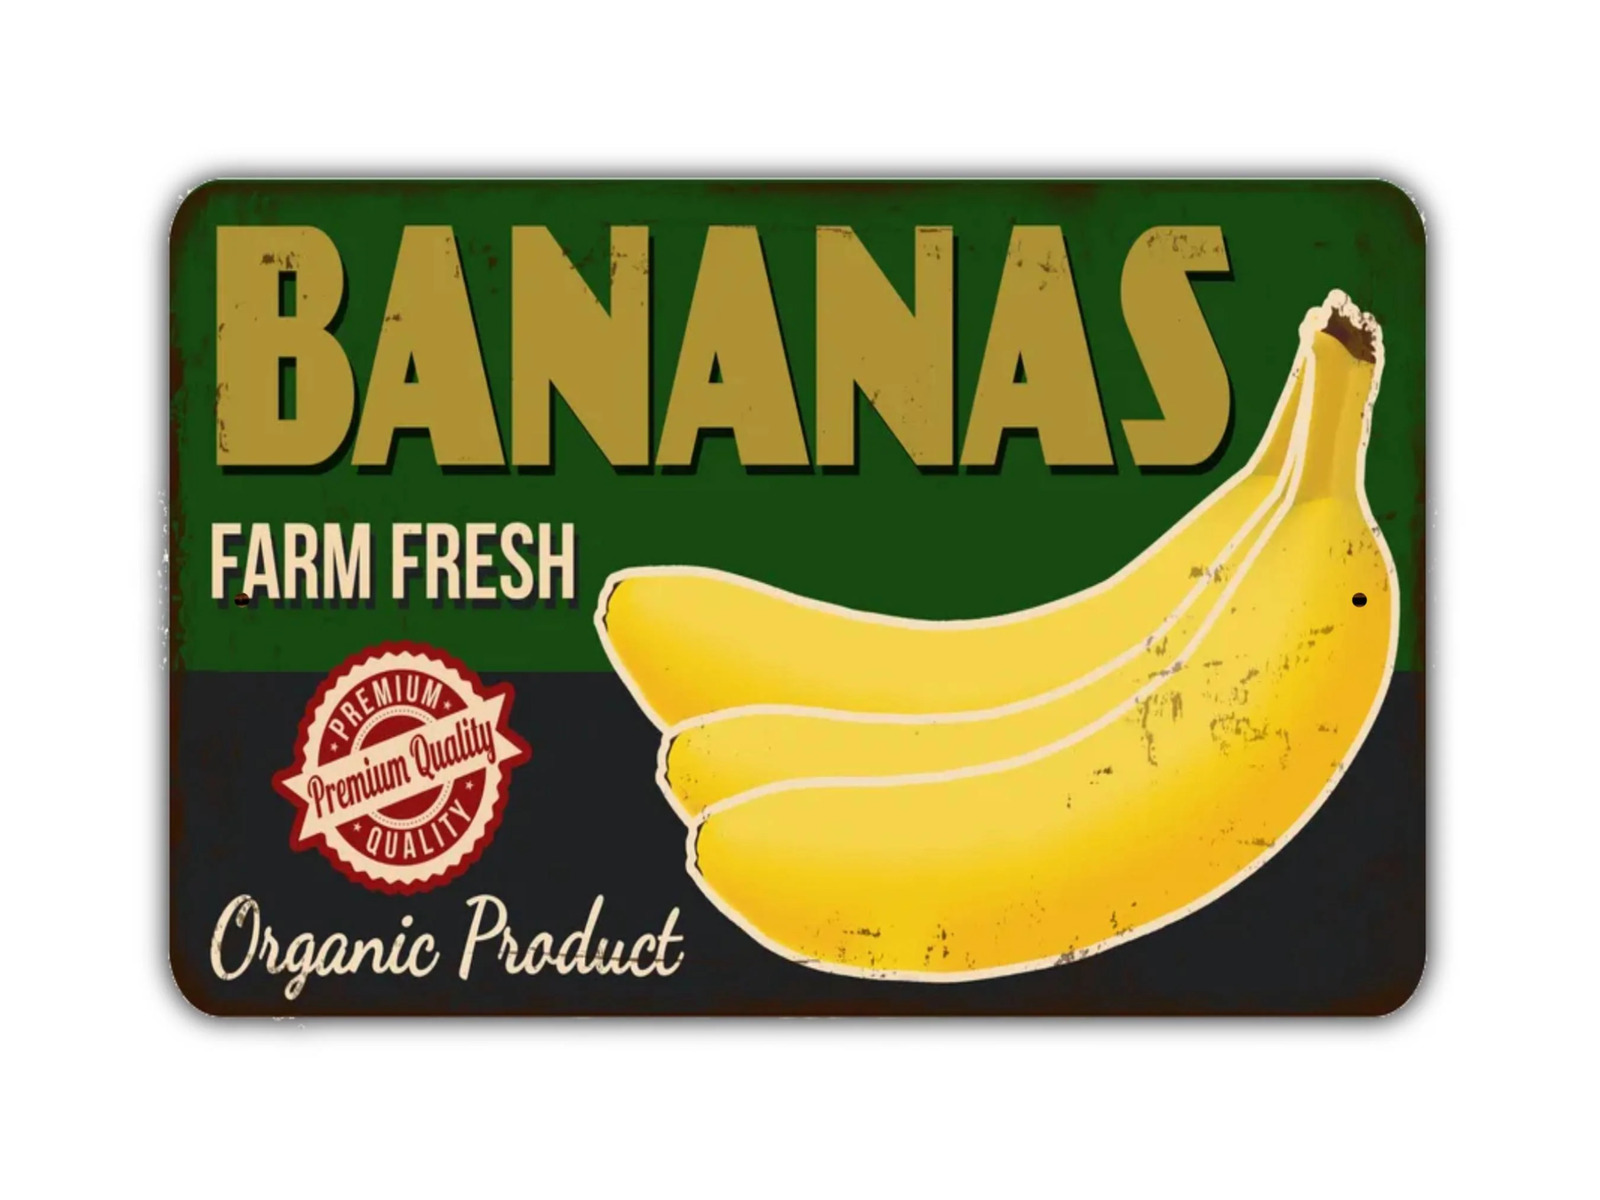 Bananas Farm Fresh Sign Vintage Style